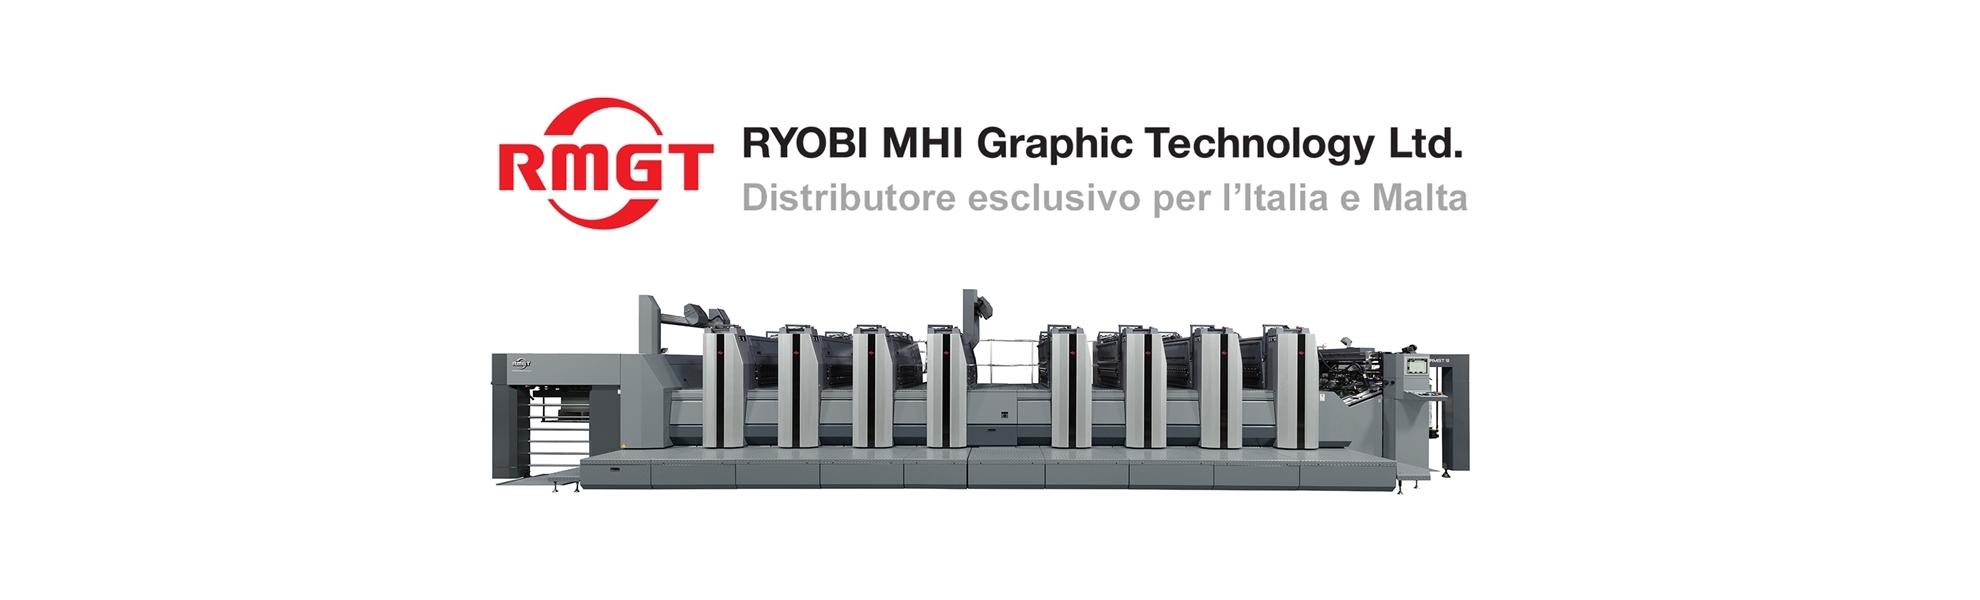 Distributore ufficiale RMGT RYOBI MHI Graphic Tecnology